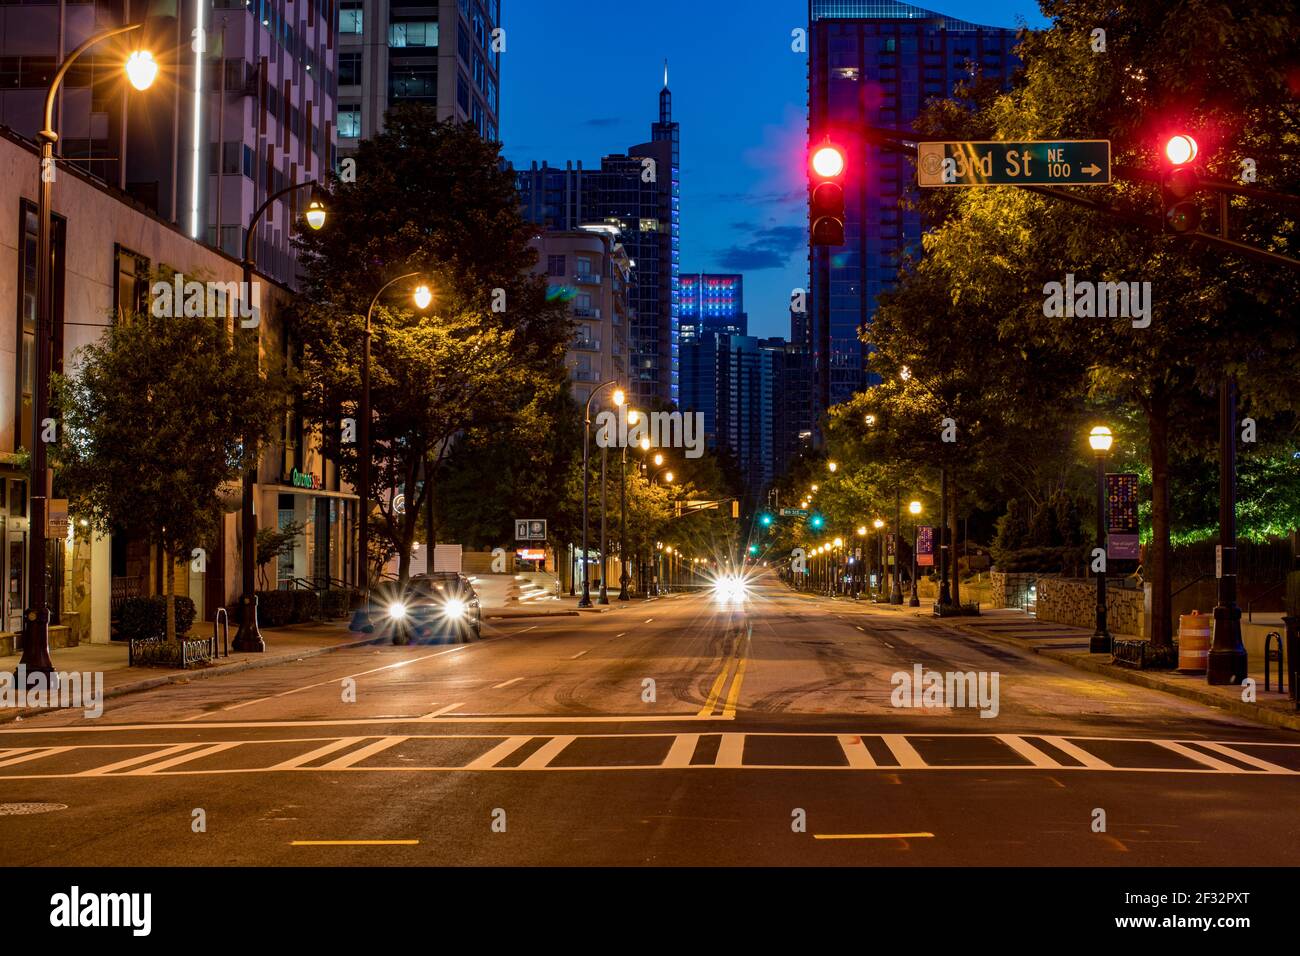 Atlanta, Ga USA - 06 14 20: Downtown Atlanta 3rd street at night traffic red light Stock Photo